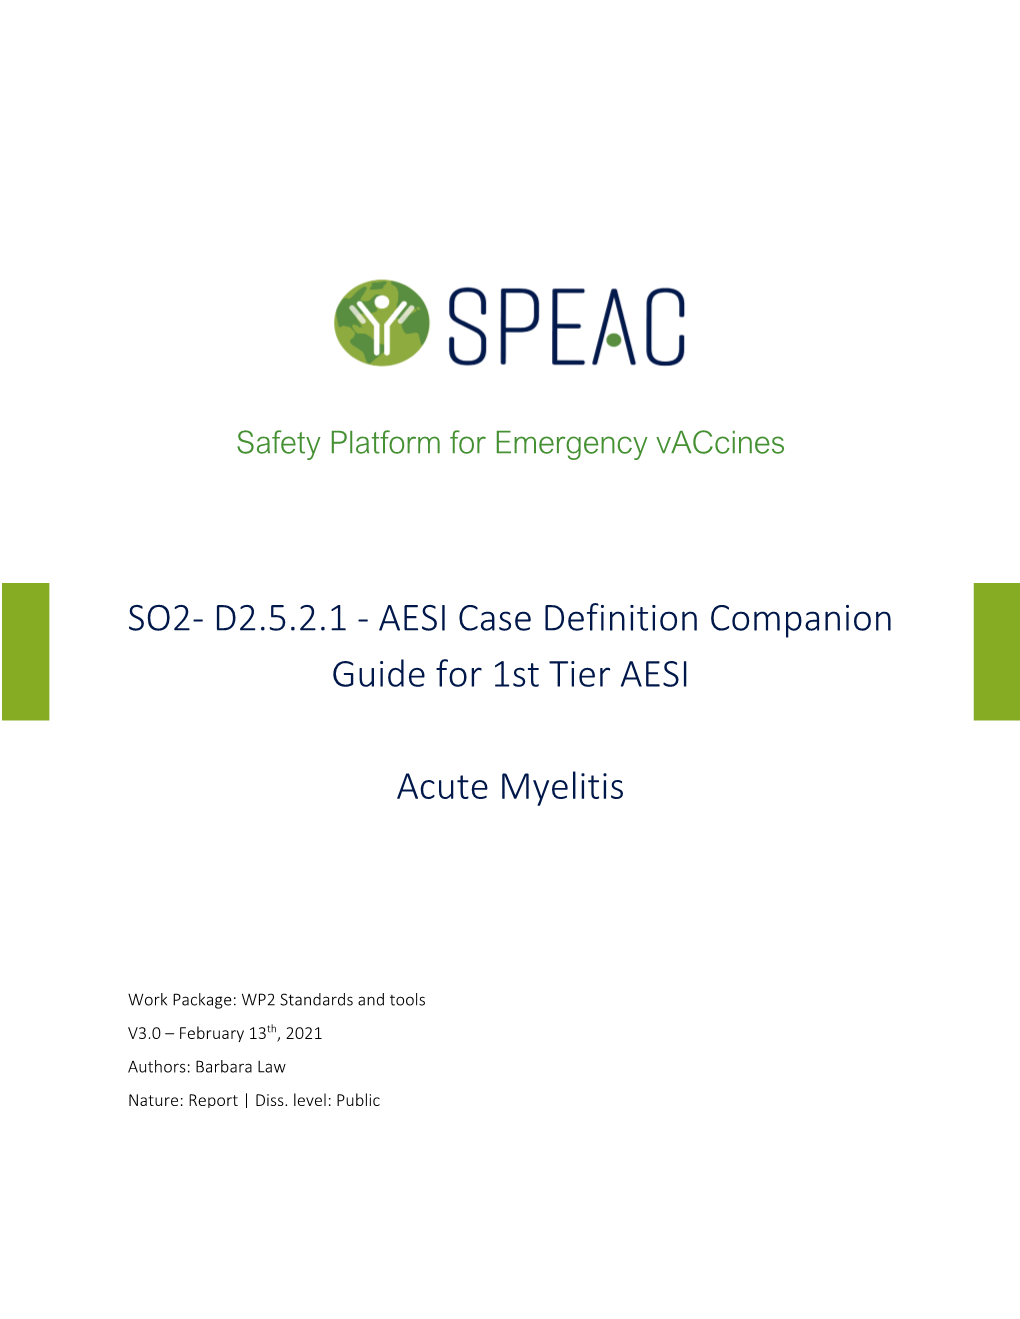 AESI Case Definition Companion Guide for 1St Tier AESI Acute Myelitis